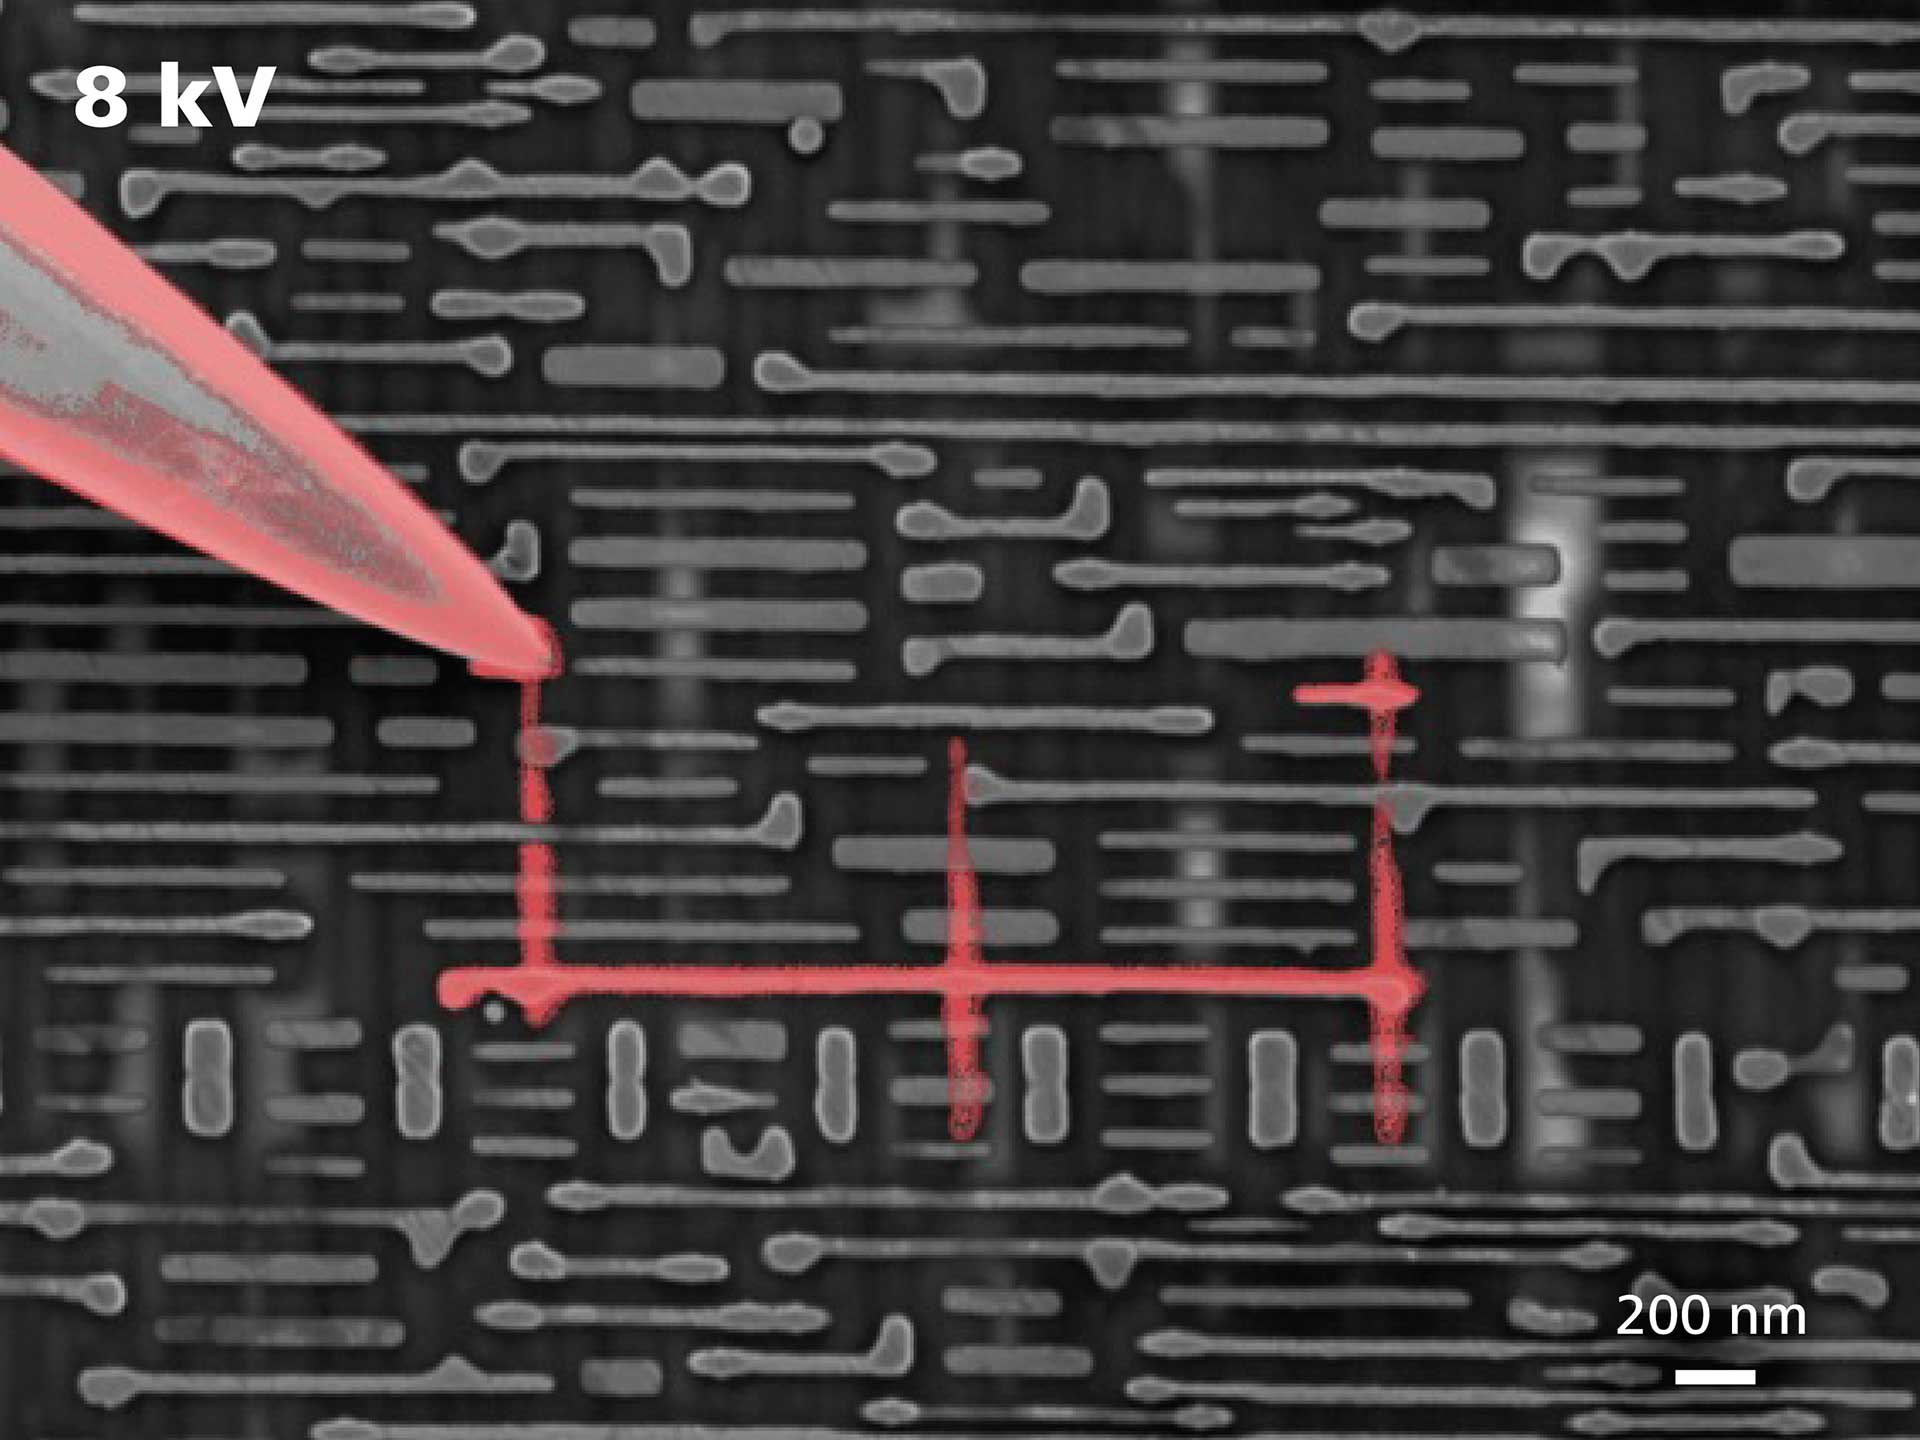 EBAC Nanoprobing 14 nm Logic Device at 8 kV